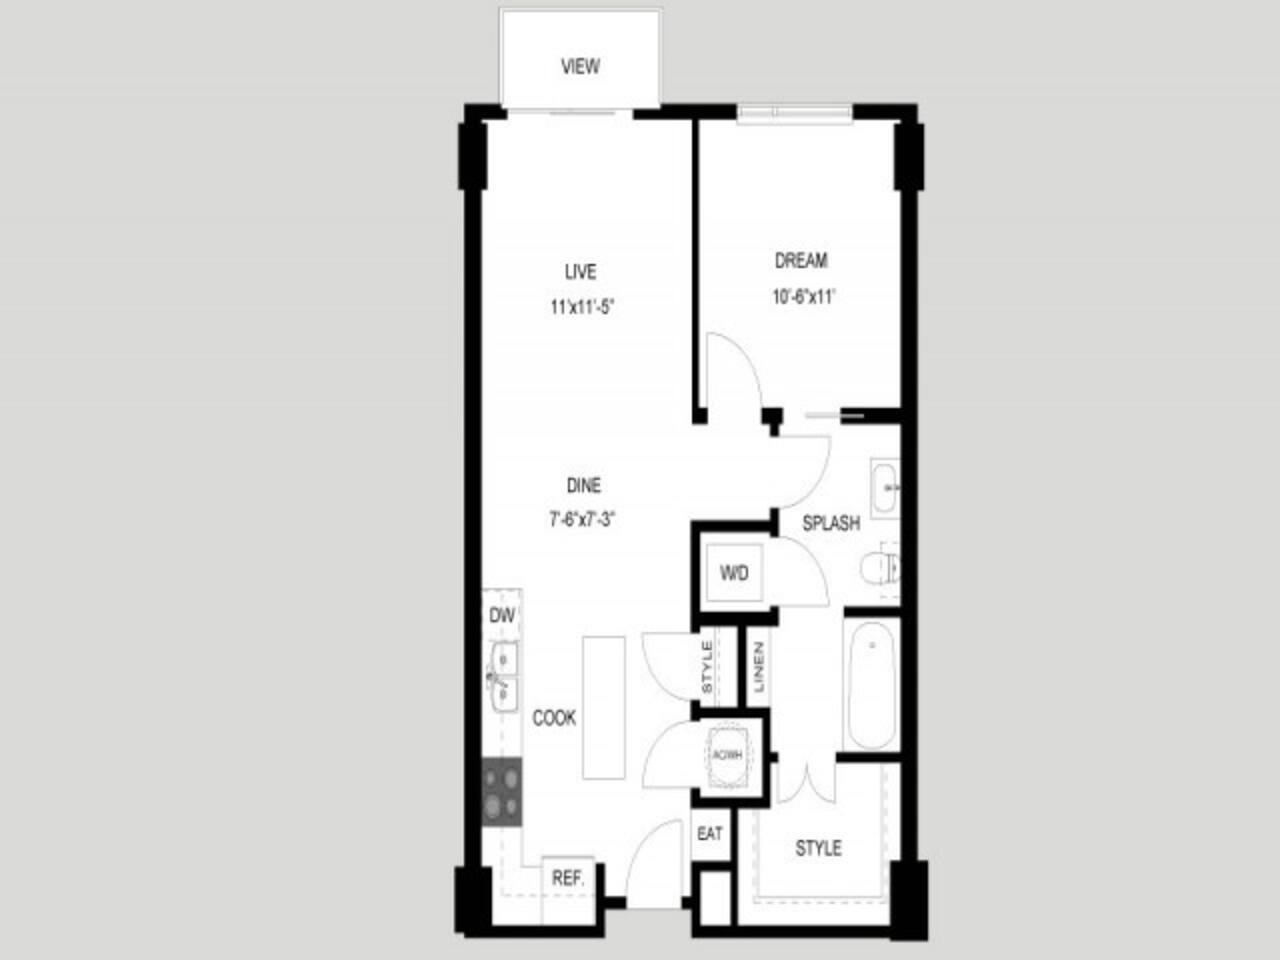 Floorplan diagram for The Stadium, showing 1 bedroom